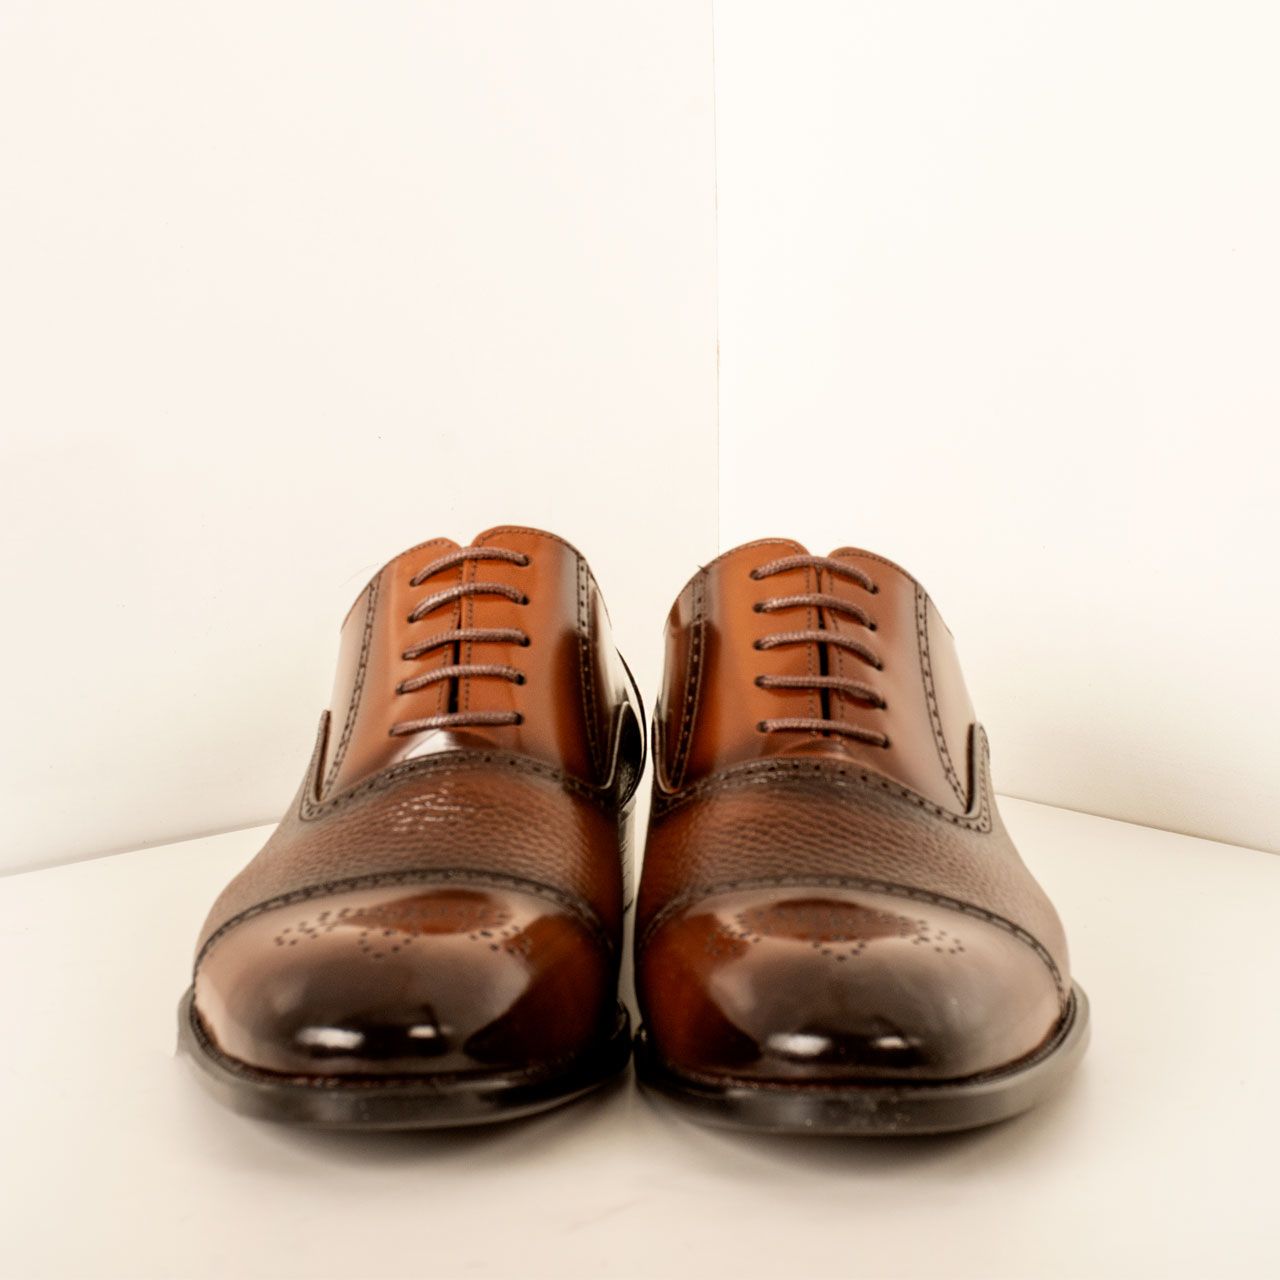  کفش مردانه پارینه چرم مدل SHO208-7 -  - 5